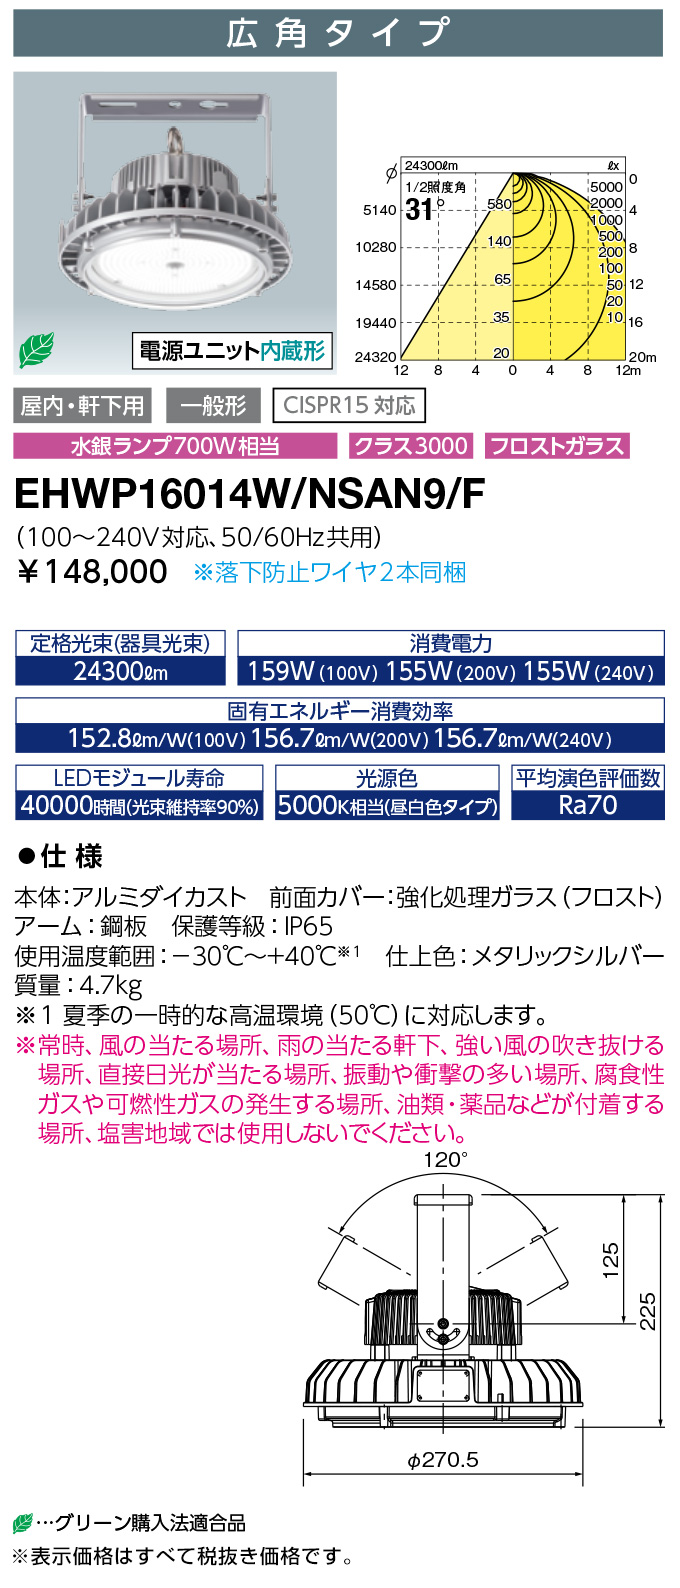 EHWP16014W-NSAN9-F